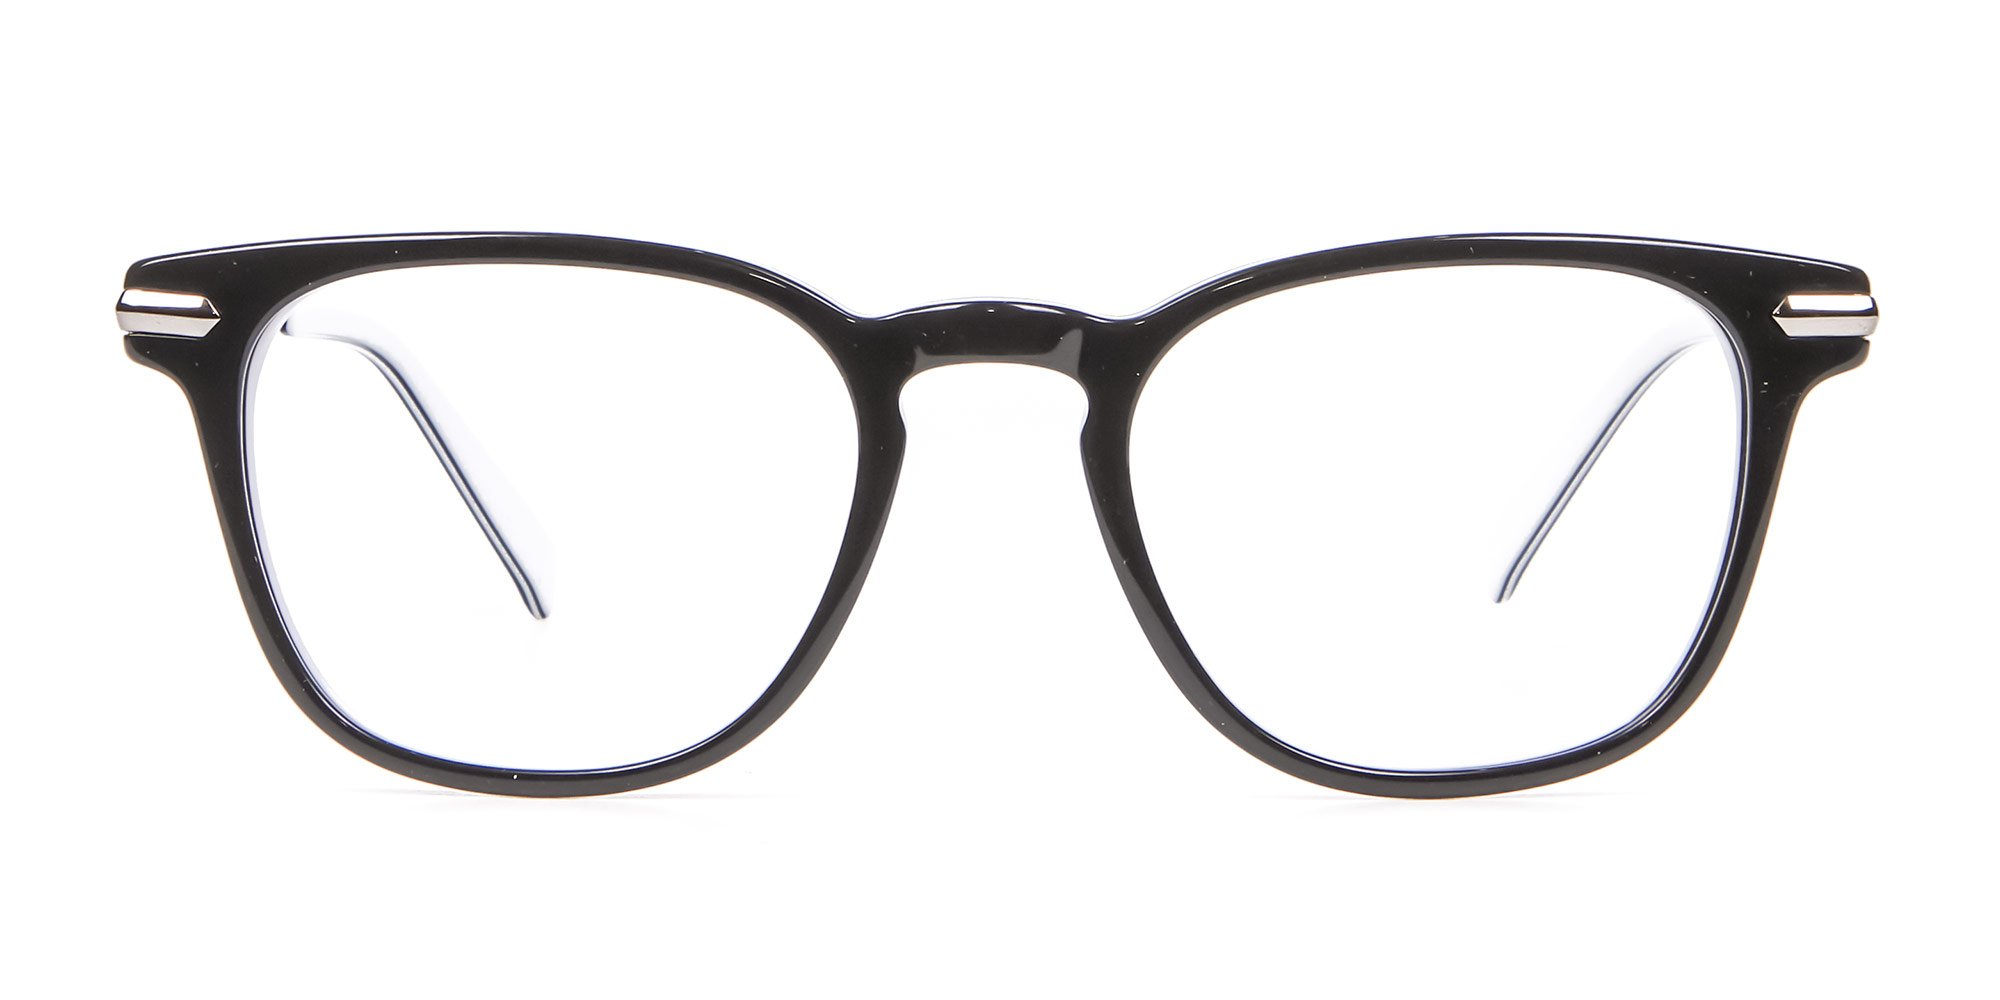 Black and White Hipster Glasses 